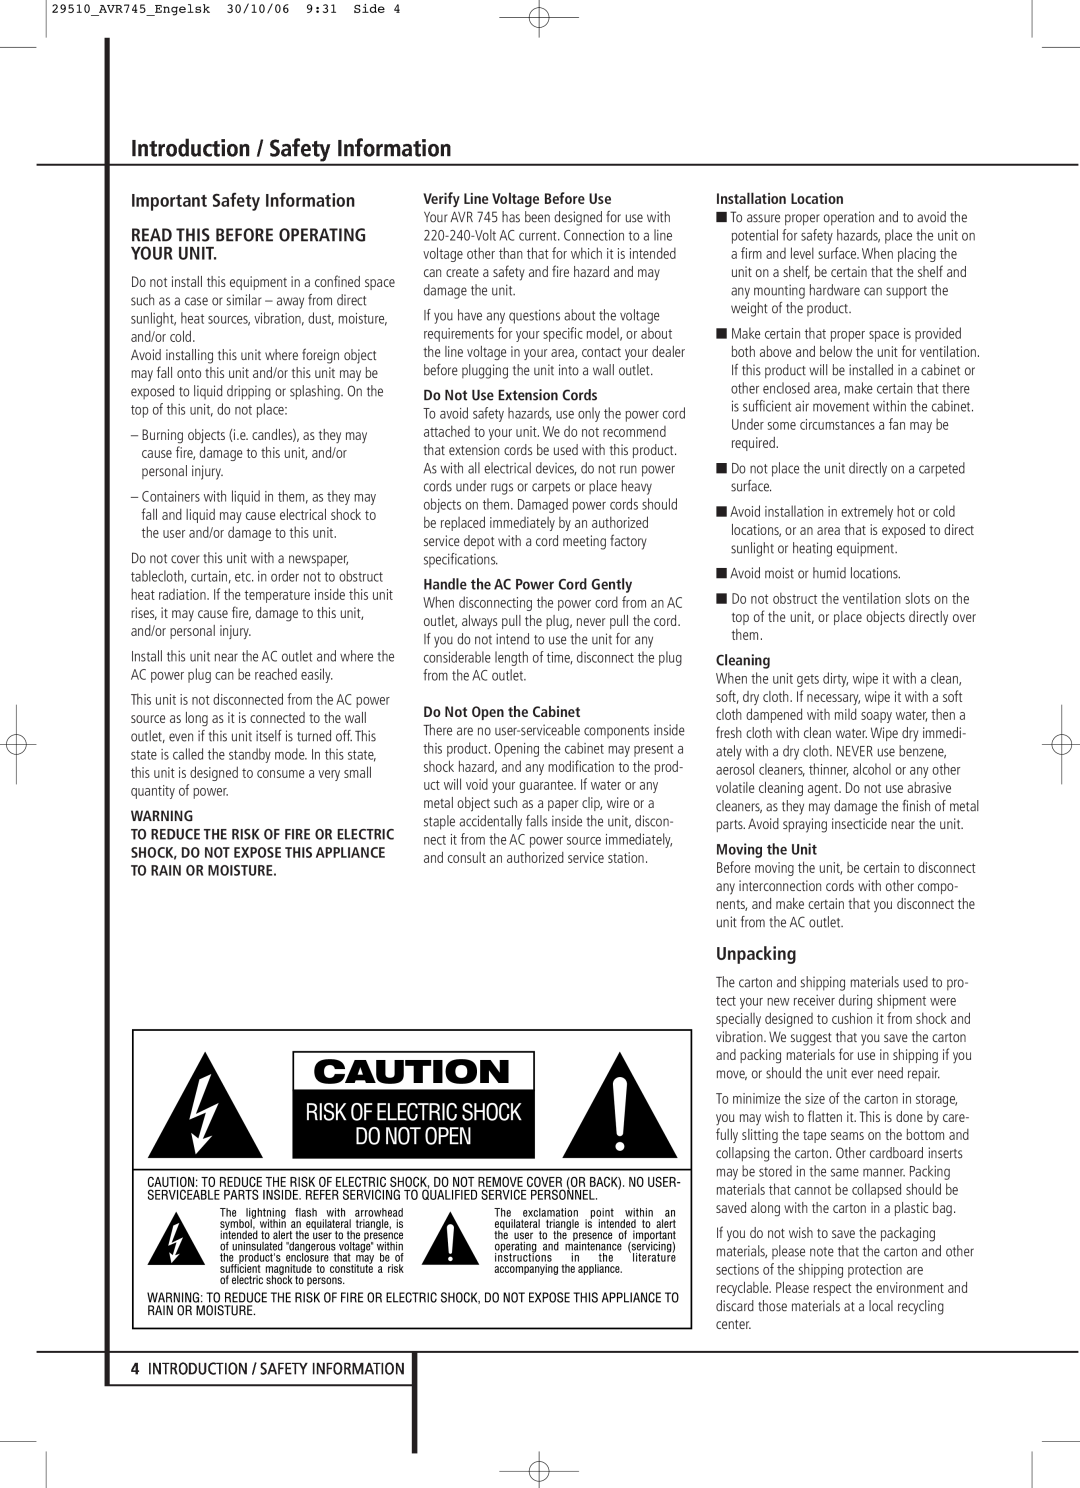 Harman-Kardon AVR 745 Introduction / Safety Information, Important Safety Information, Unpacking, Do Not Open the Cabinet 